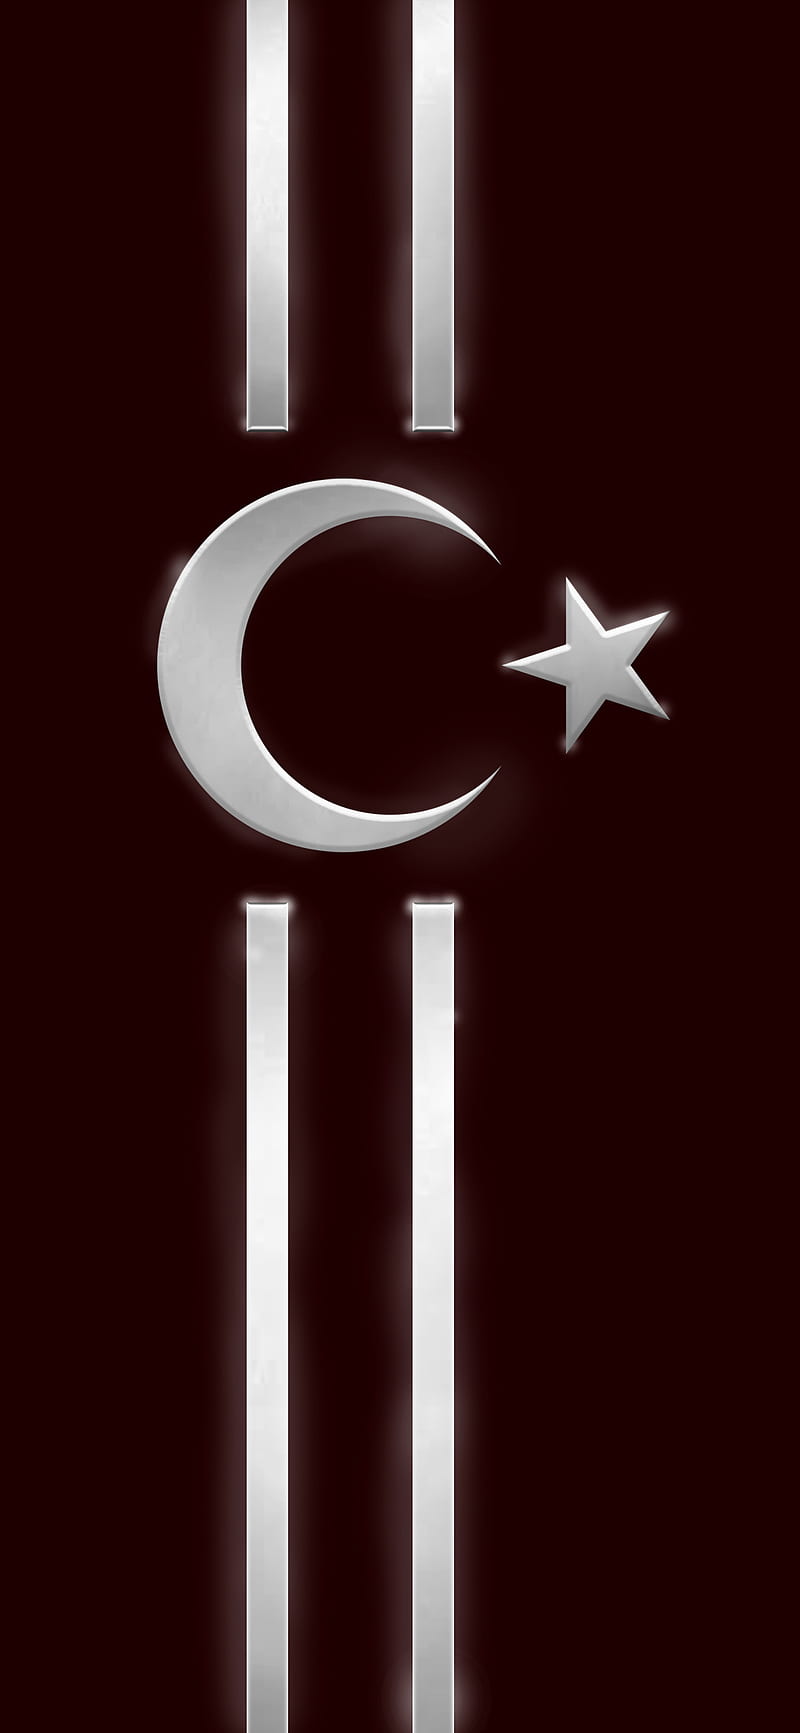 Turkey, abdulhamit, ataturk, dirilis ertugrul, europe, flag, ottoman, turkish, turk bayragi, world, HD phone wallpaper